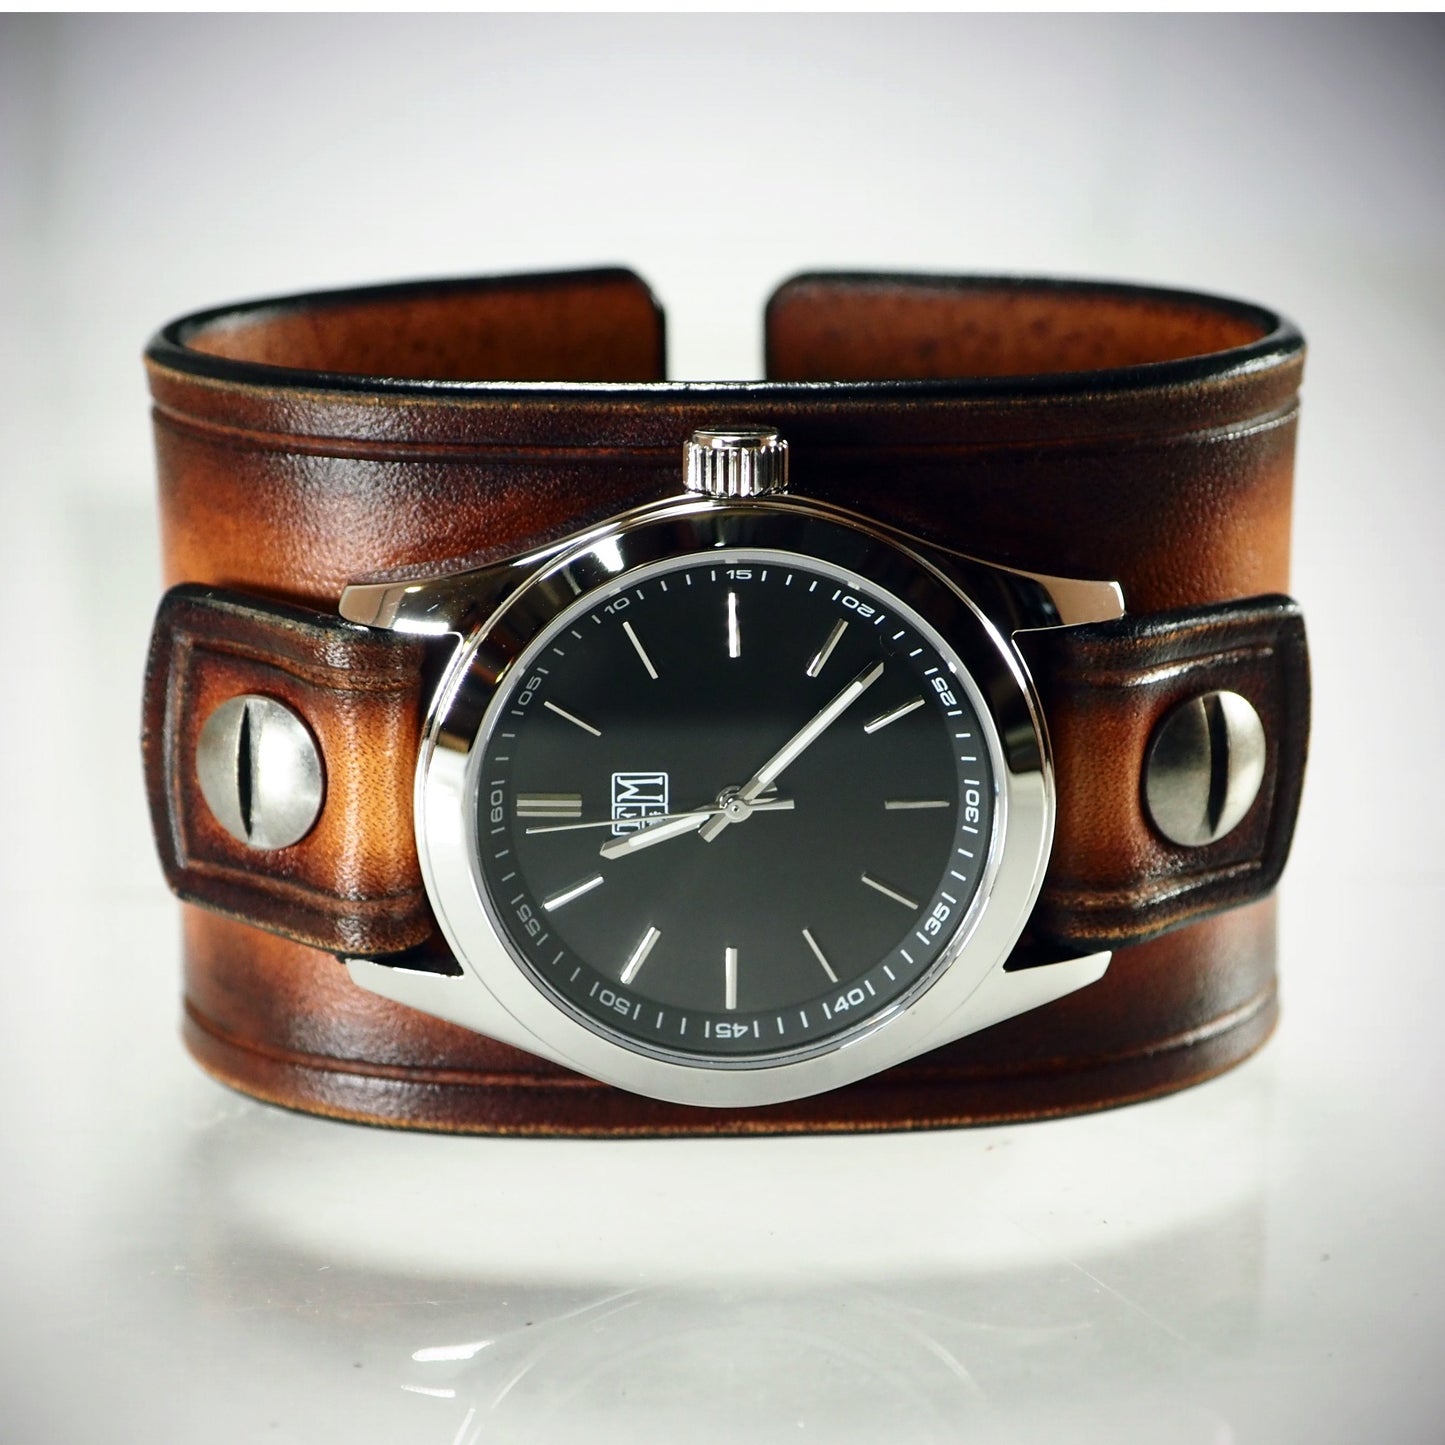 Sunburst Leather cuff watch : Refined American craft